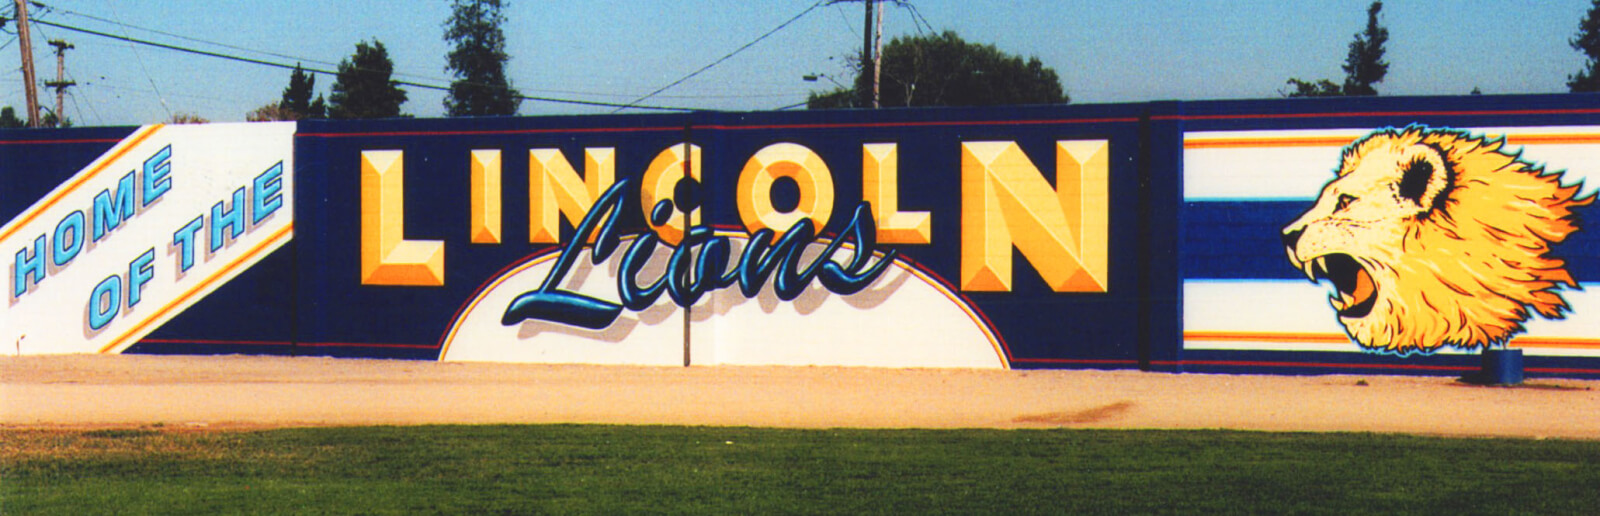 custom school signs San Jose lincoln football wall mascot mural painting